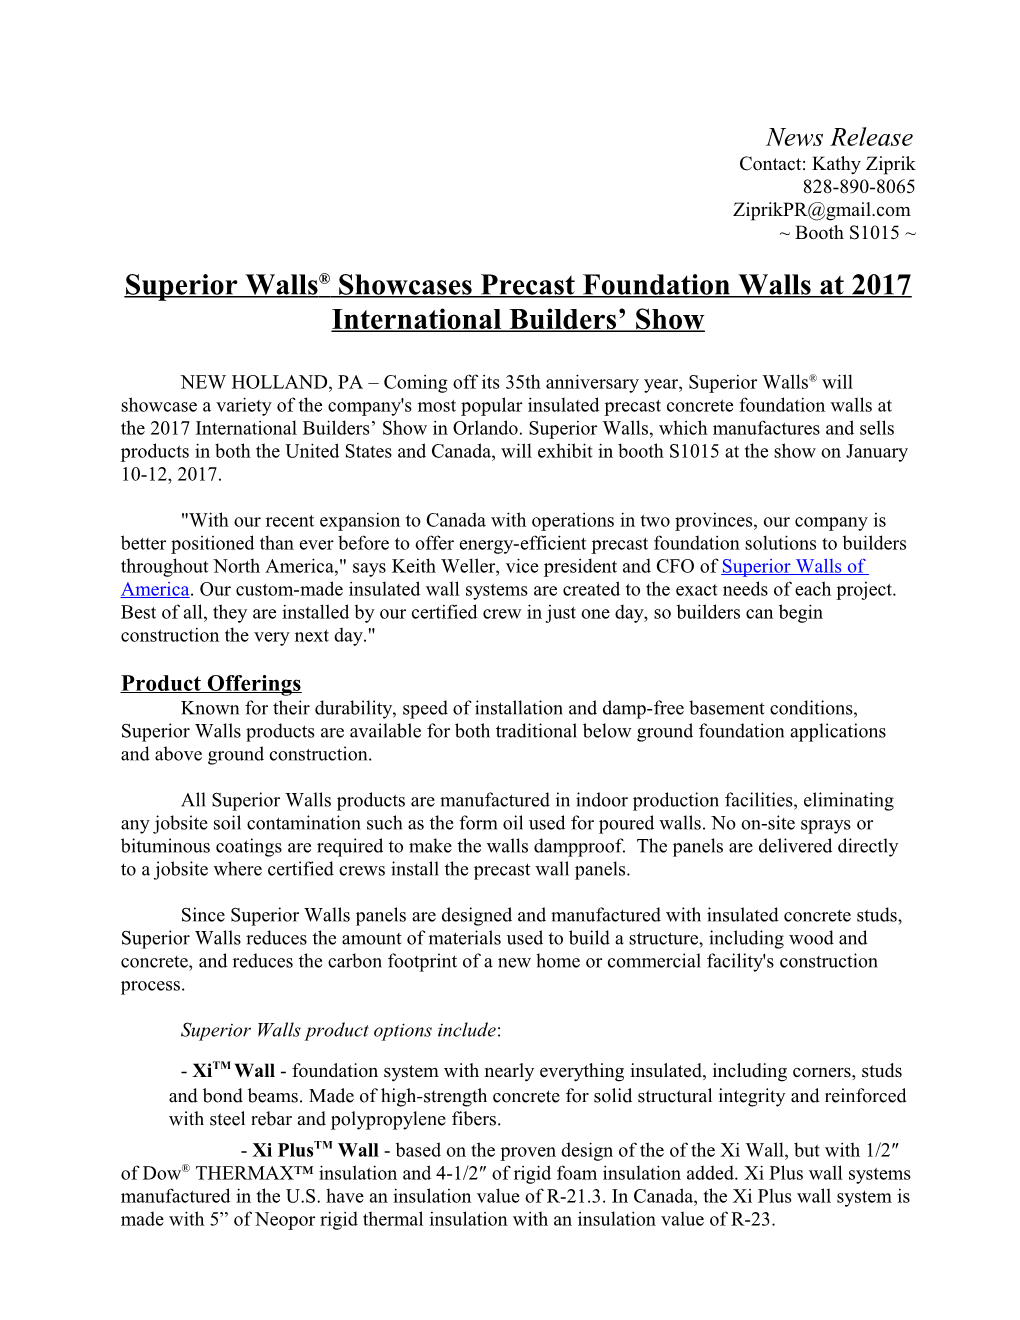 Superior Walls Showcases Precast Foundation Walls at 2017 International Builders Show